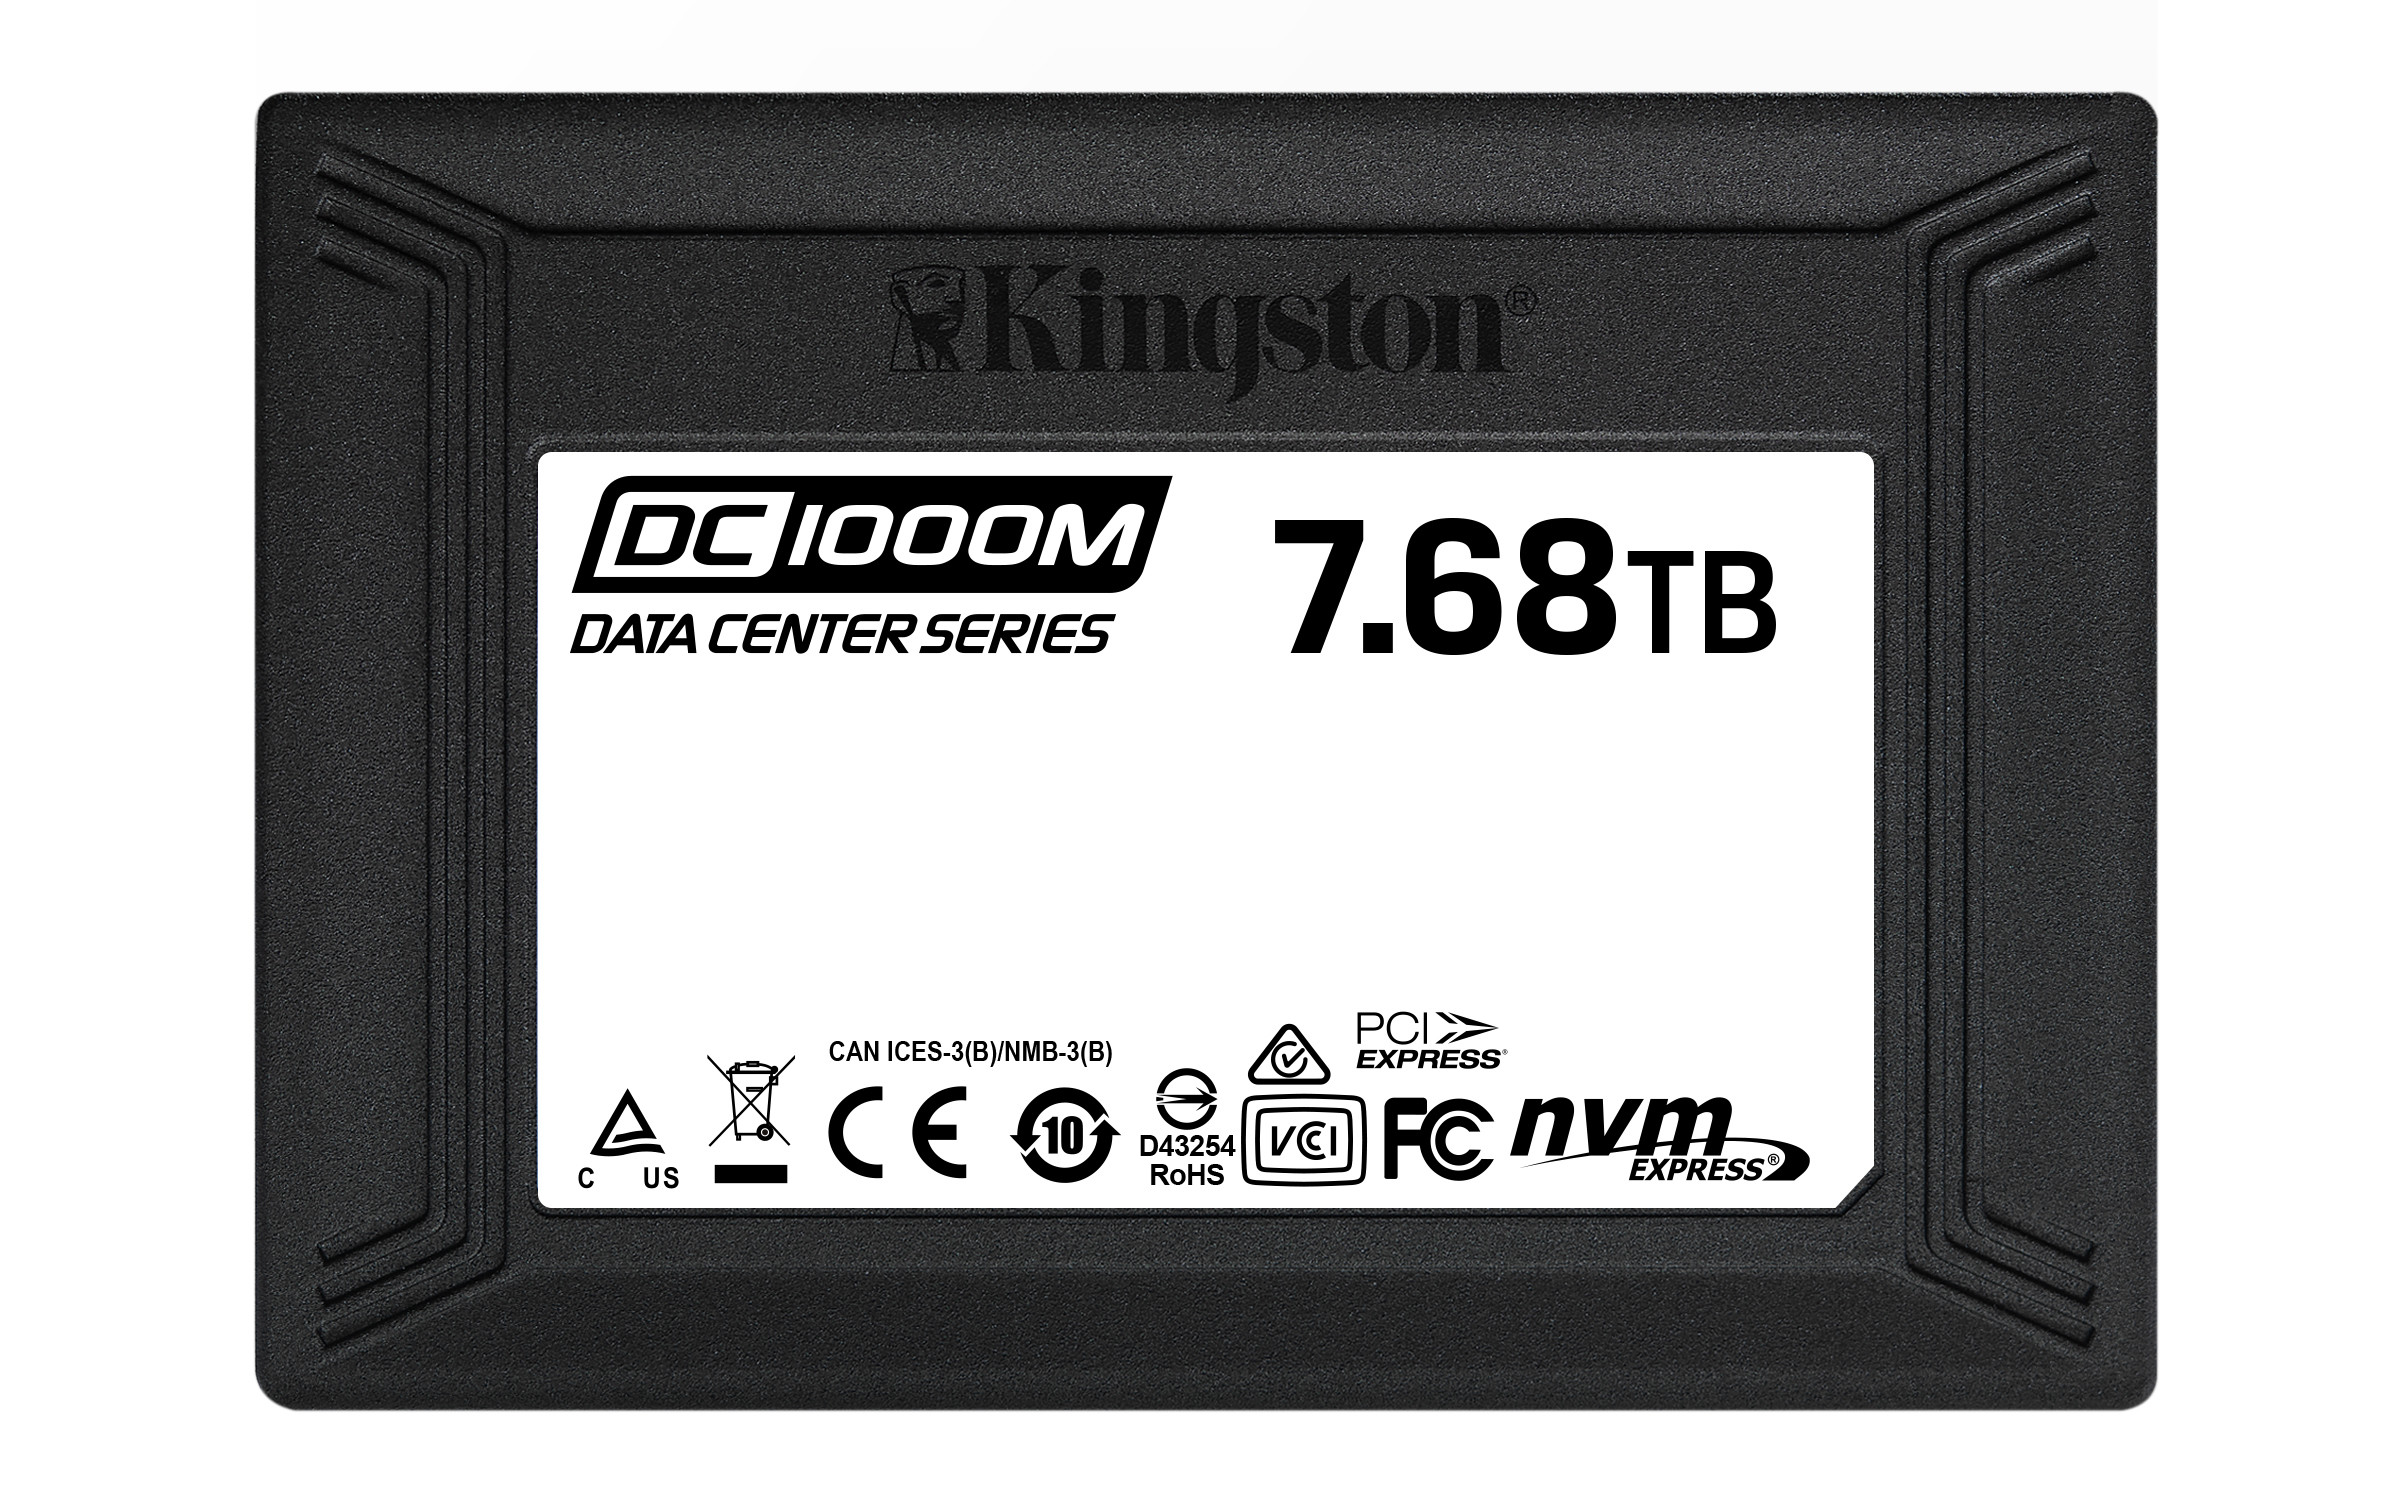 kingston dc1000m 1 Kingston เปิดตัว NVMe SSD DC1000M รุ่นใหม่ล่าสุดซึ่งเป็น U.2 NVMe PCIe SSD ระดับองค์กรสำหรับศูนย์ข้อมูล สำหรับการใช้งานแบบผสมผสาน